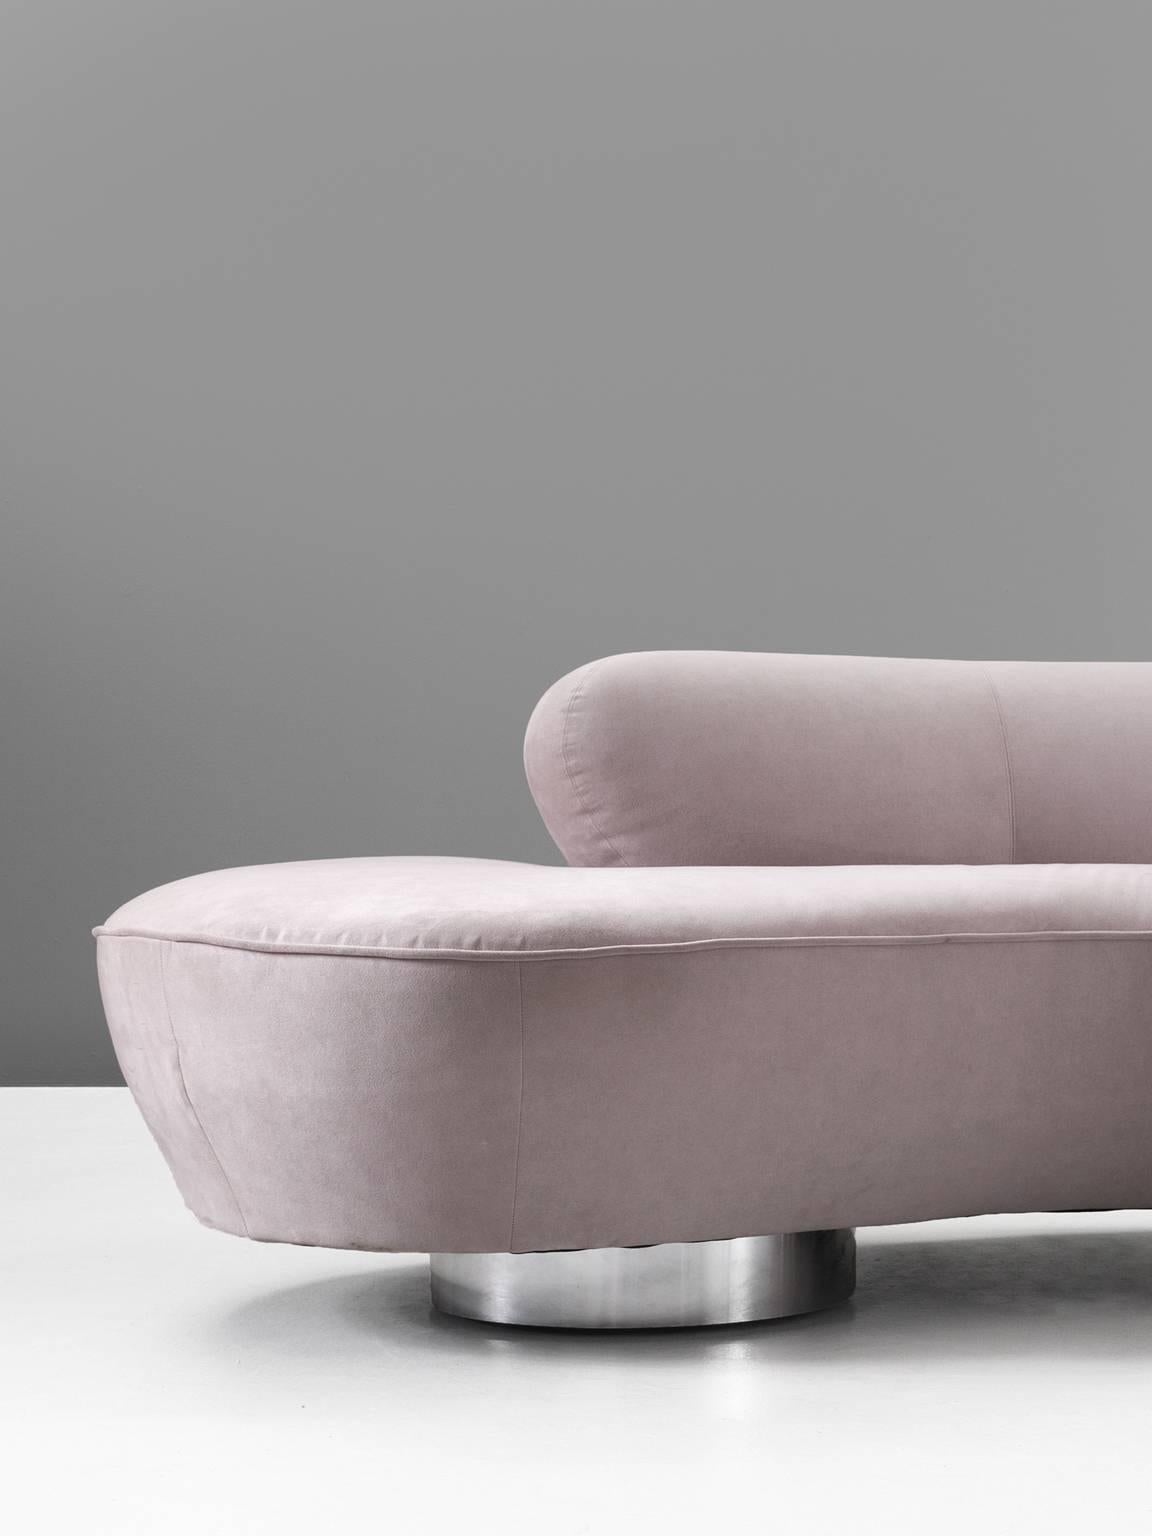 American Vladimir Kagan Sofa in Light Pink